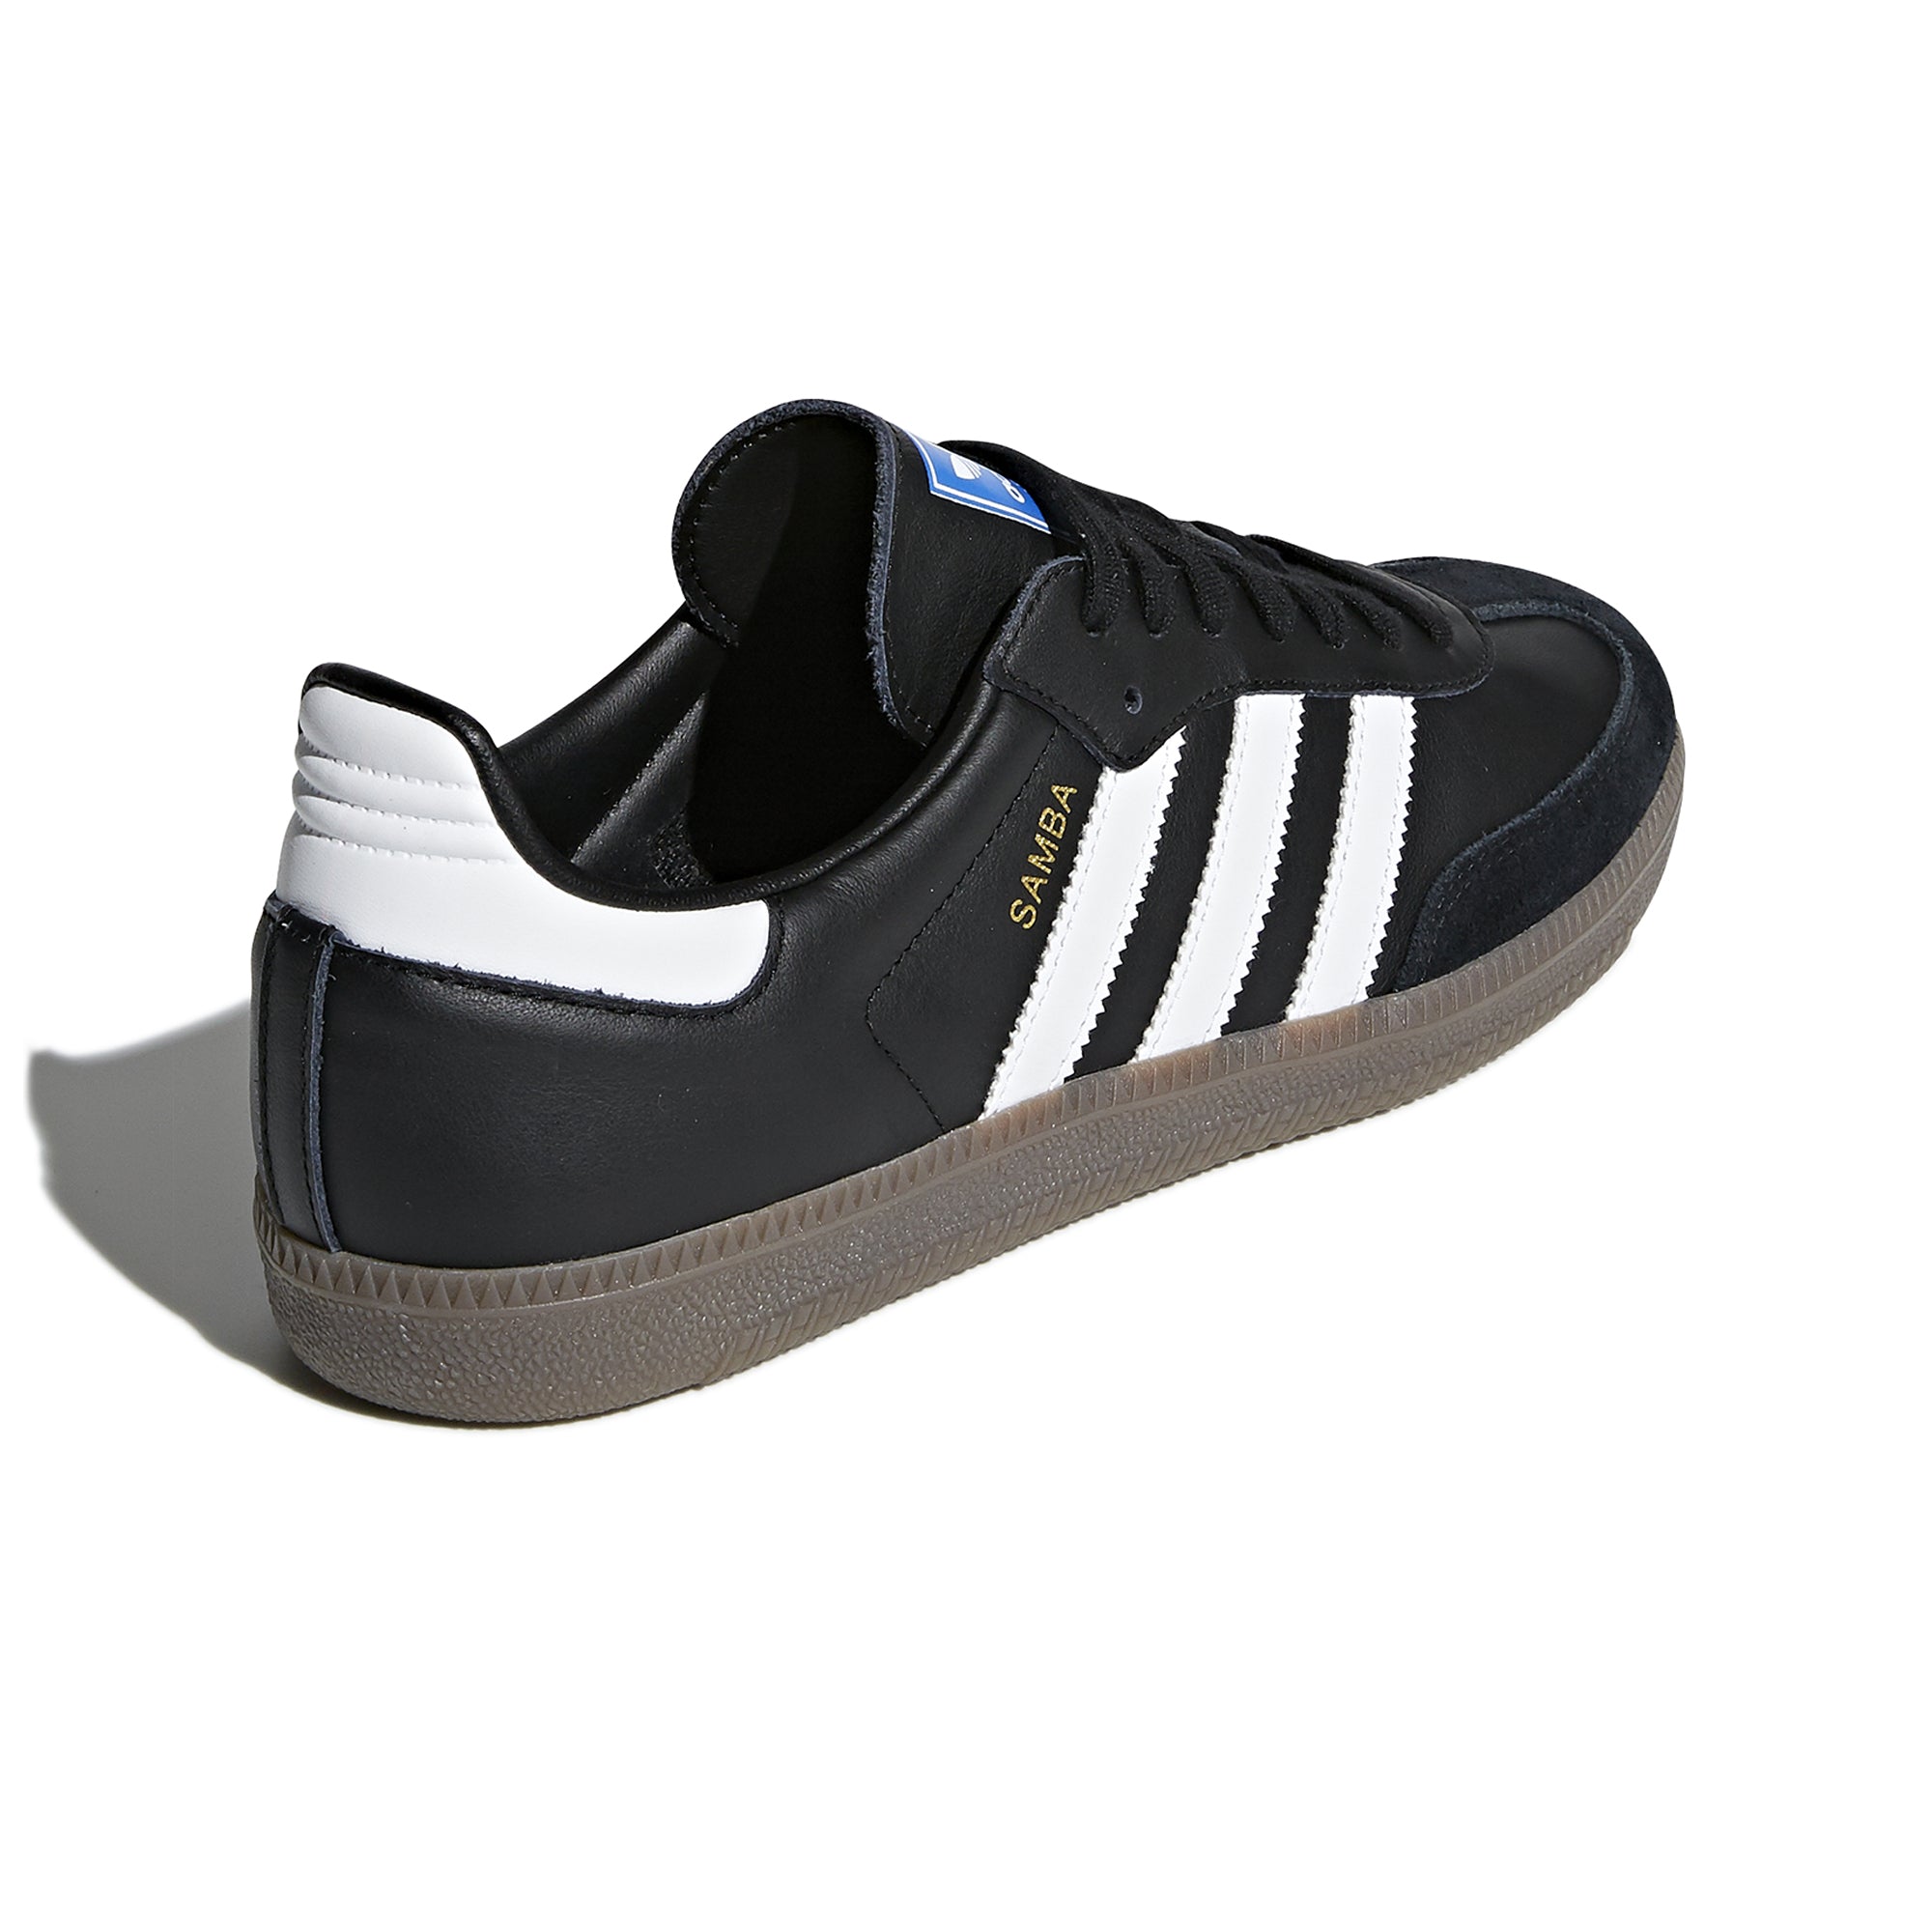 Samba OG Shoes B75807